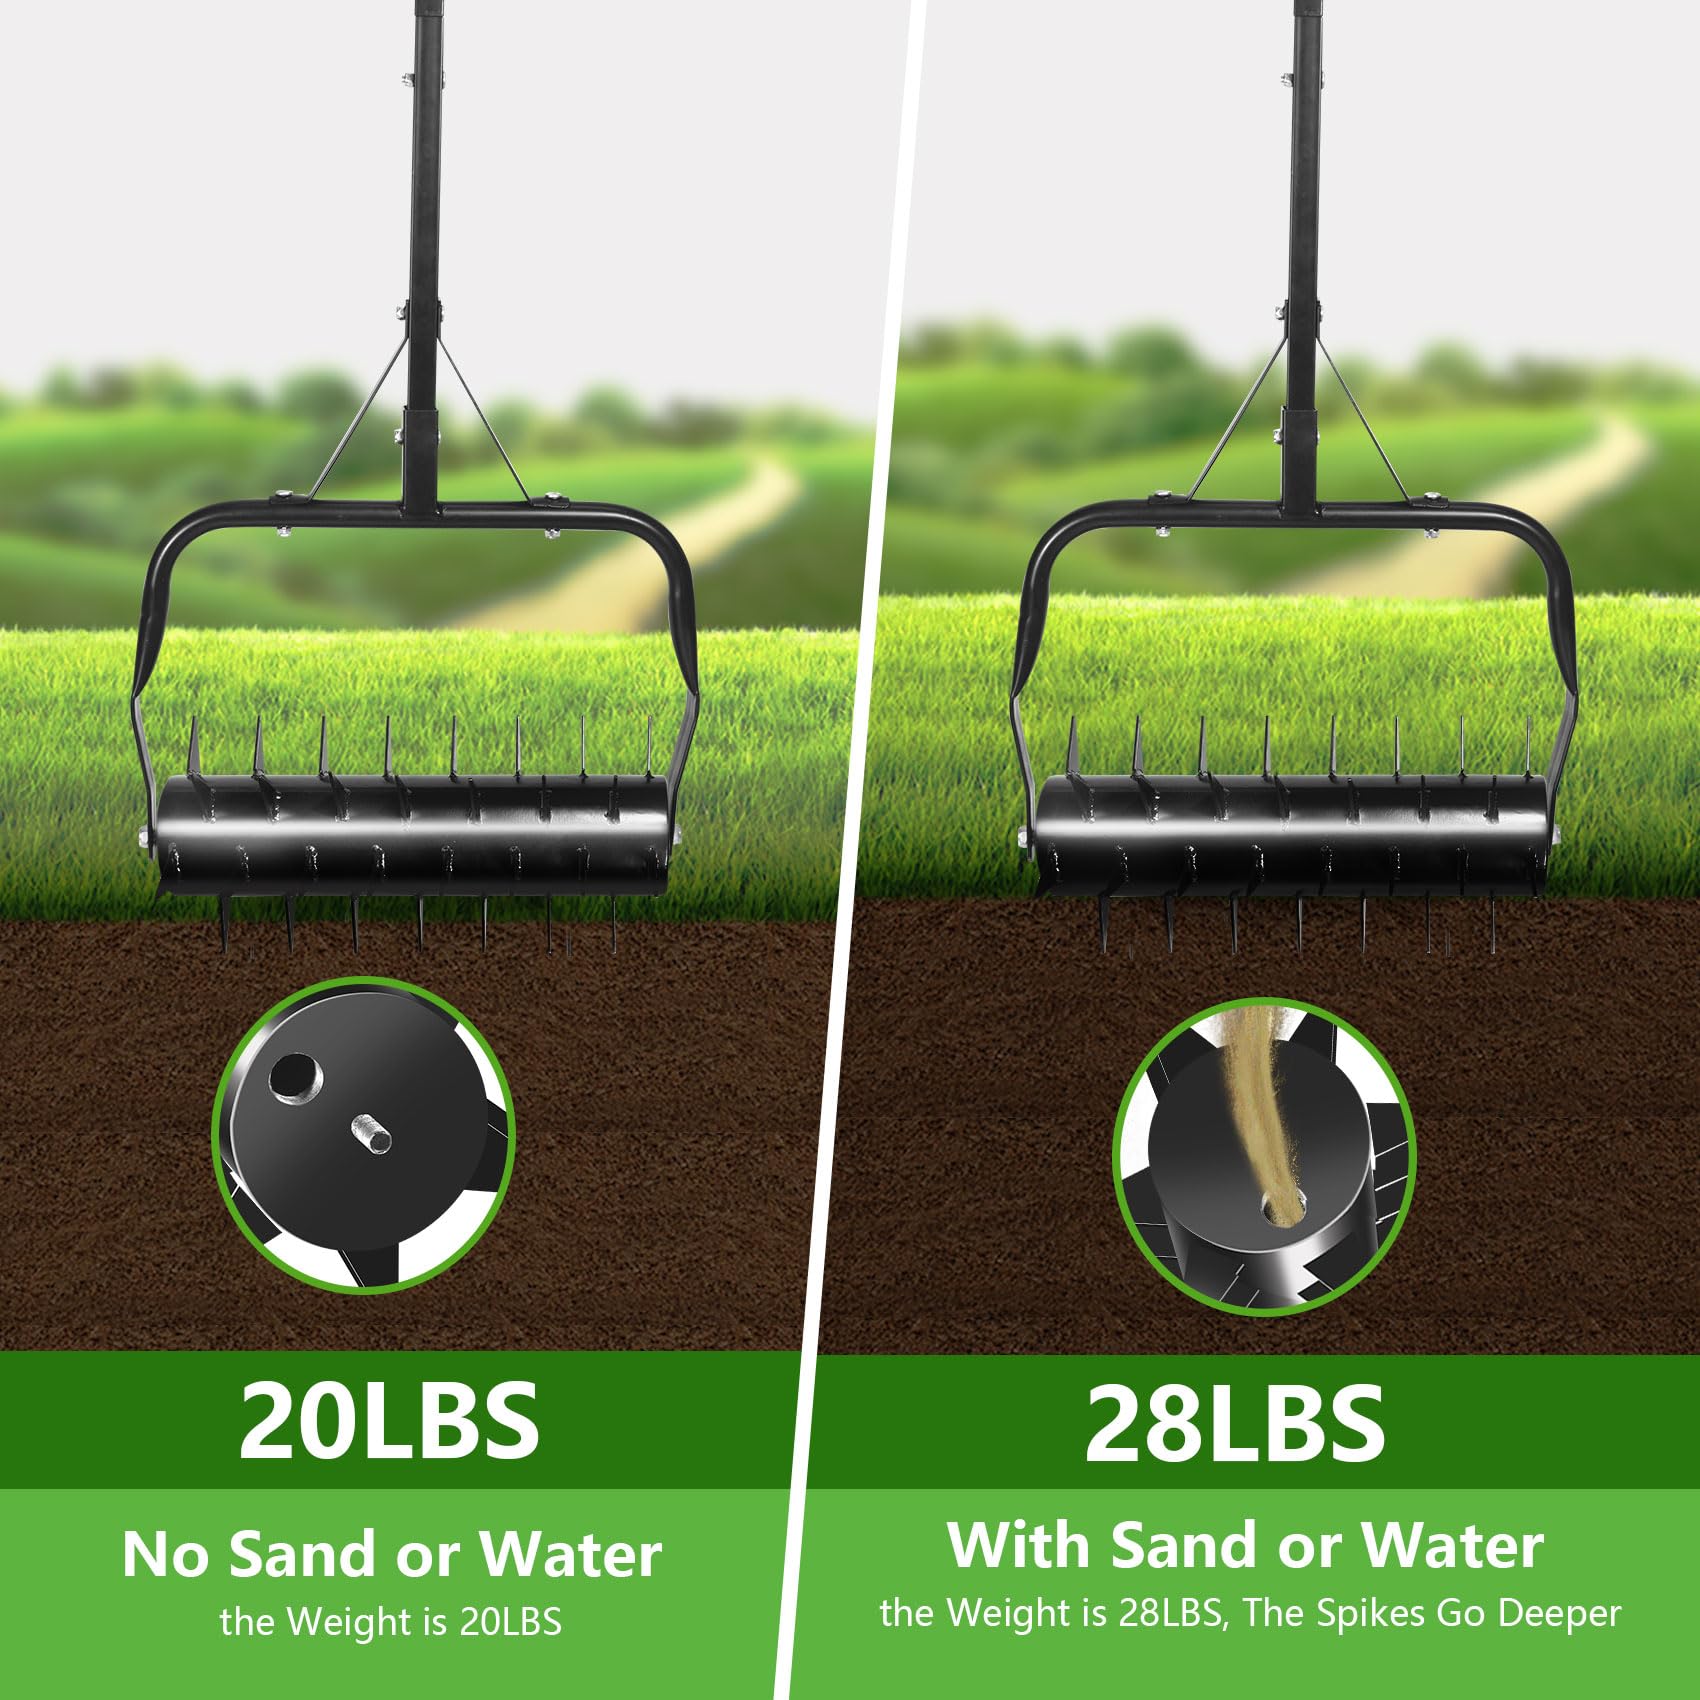 Seeutek 18 Inch Rolling Lawn Aerator, Upgraded Heavy Duty Aerator Lawn Soil Penetrator Spikes w/ 46in Handle, Manual Aerator Lawn Tool for Garden Yard